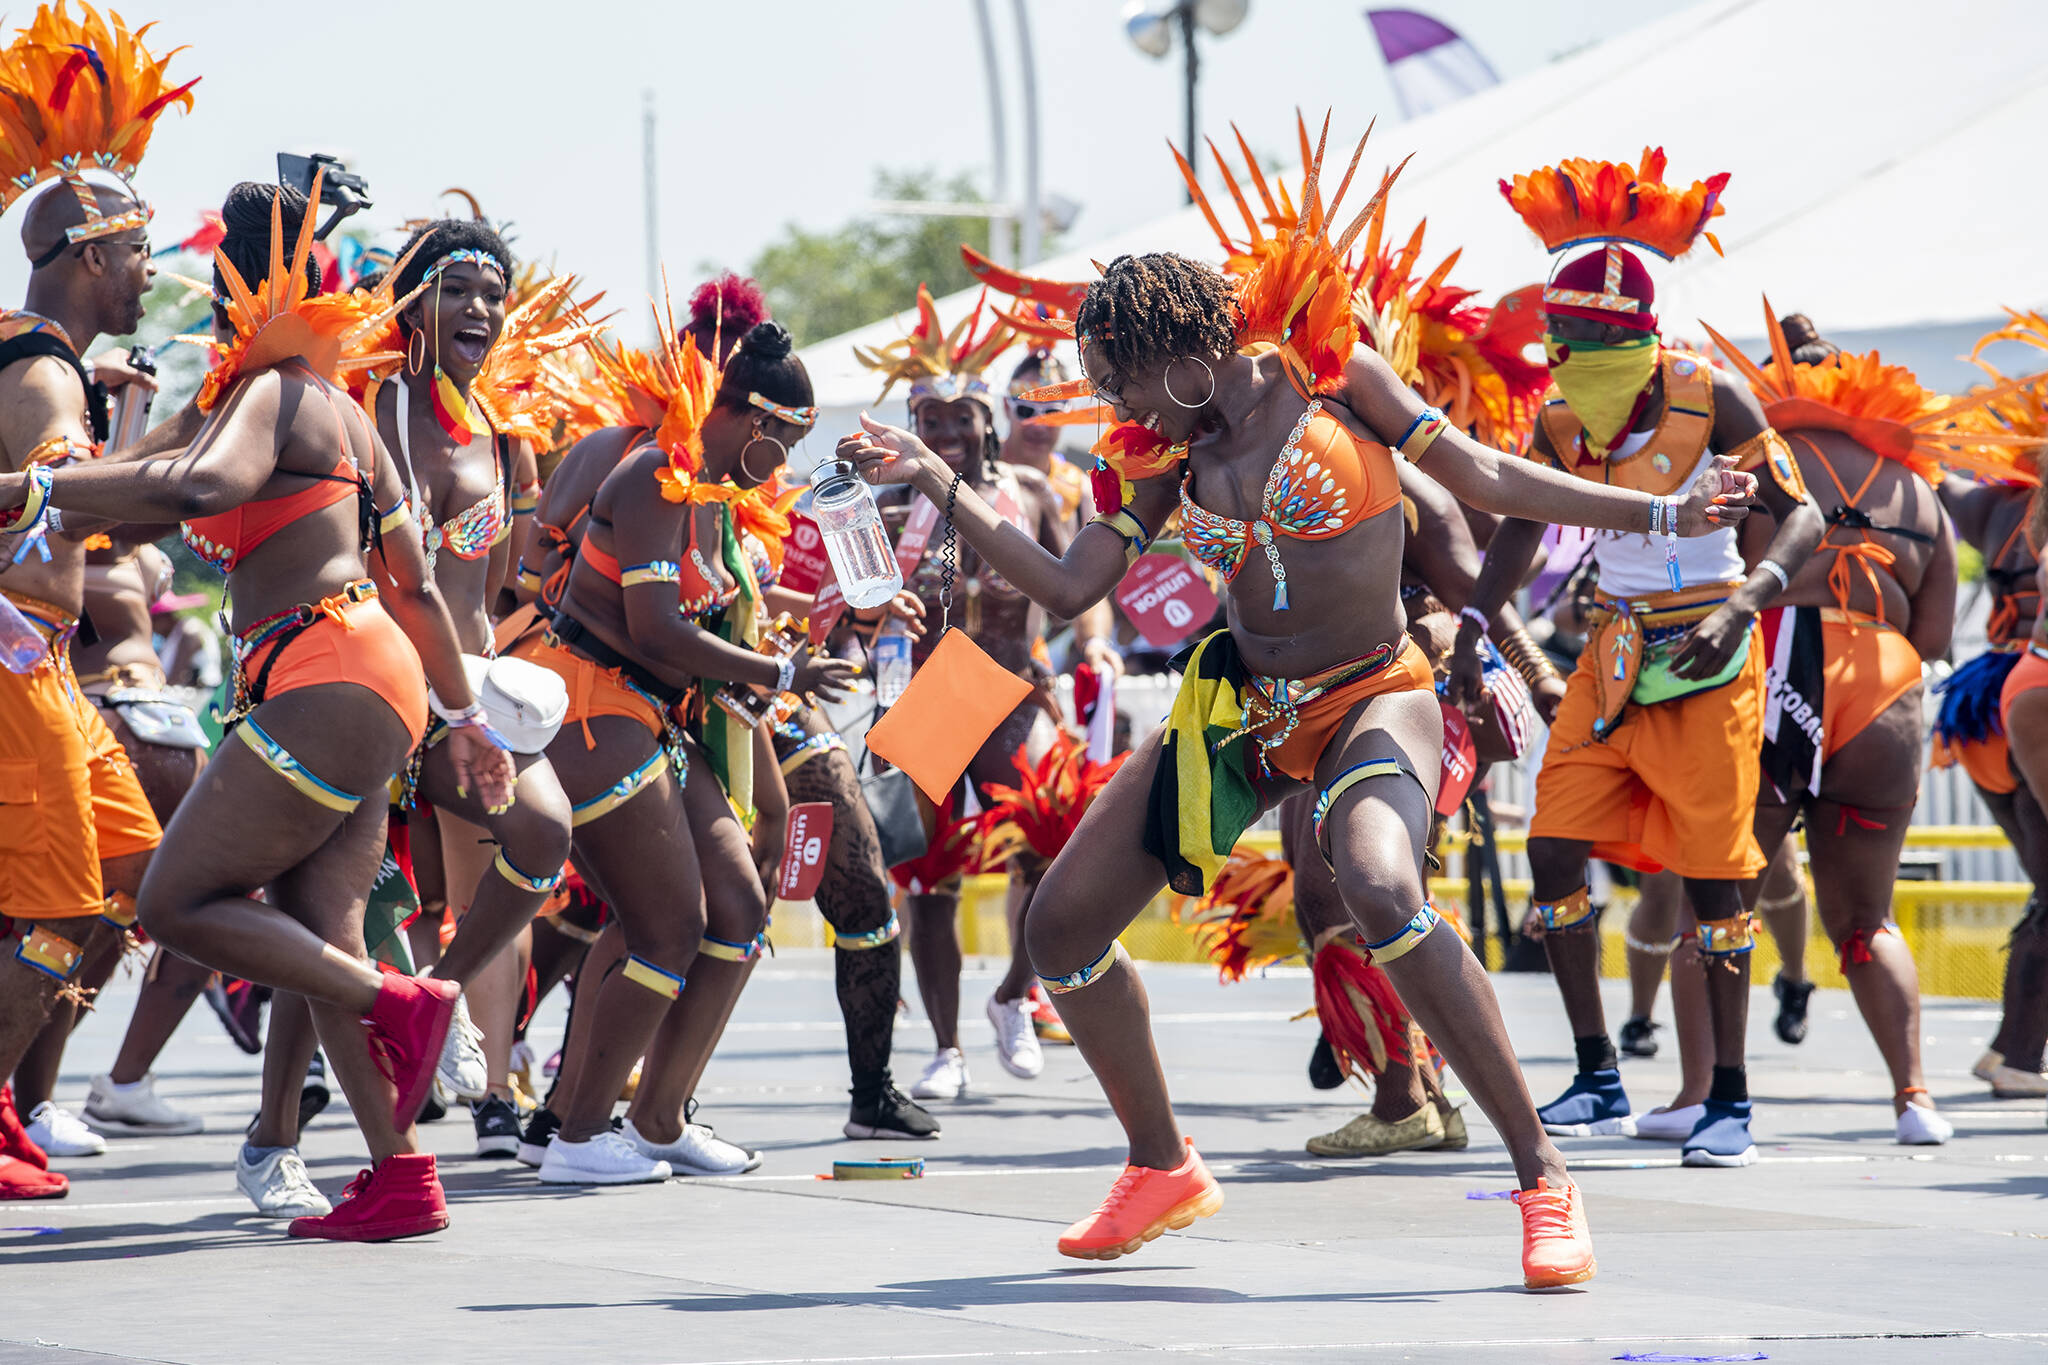 Caribbean Carnival Parade